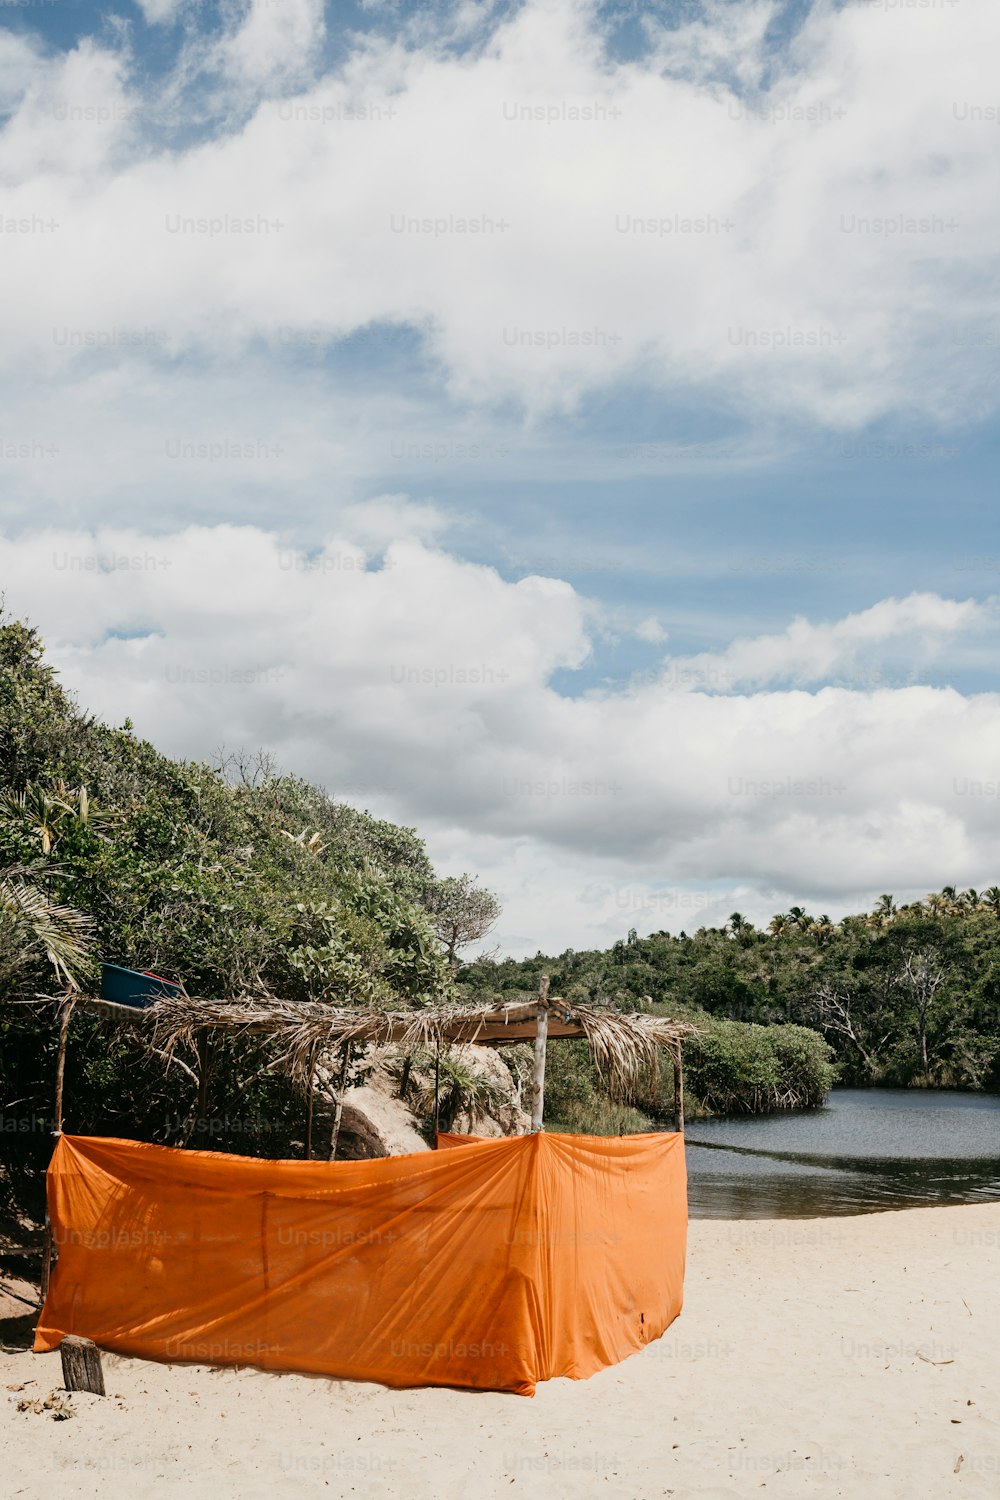 an orange tarp covering a boat on a beach